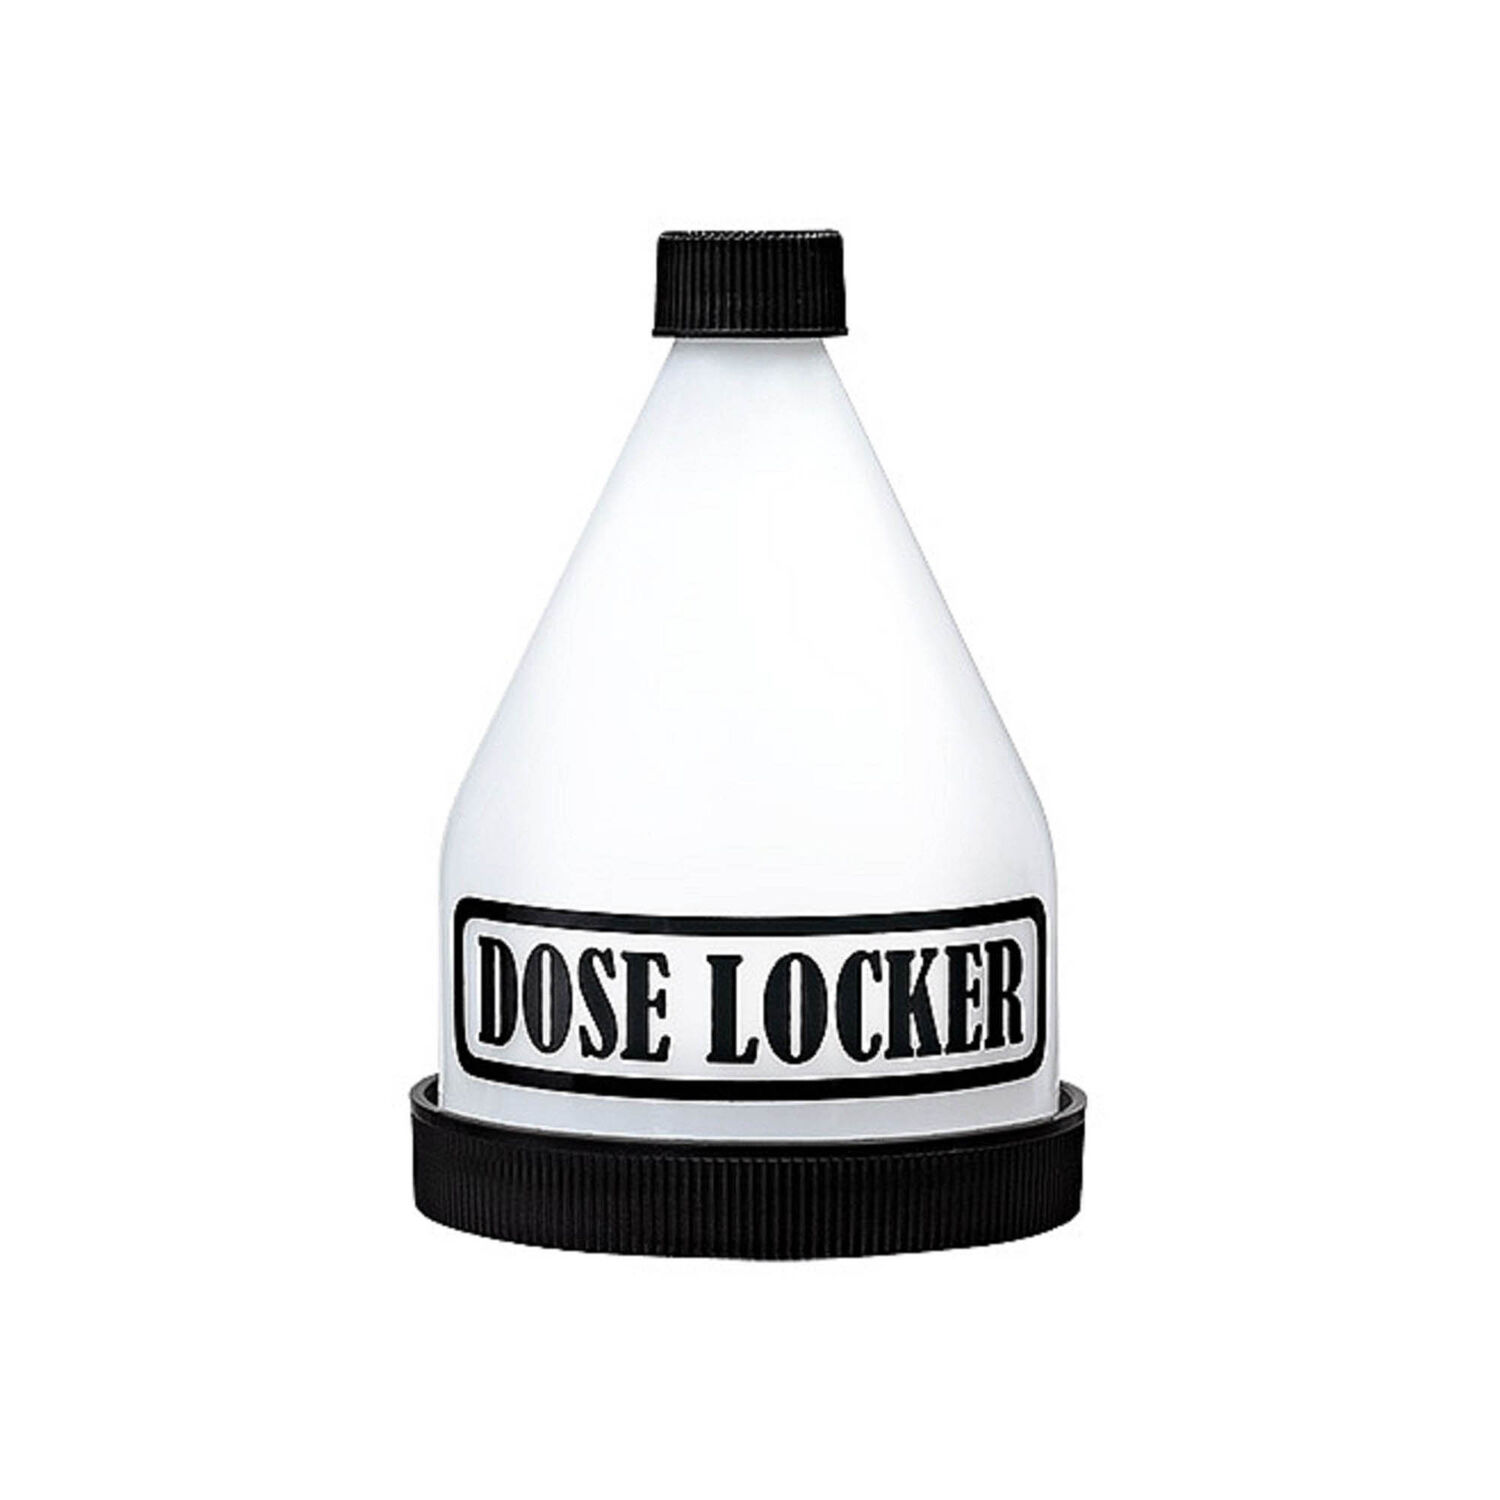 Dose Locker - 1 Item